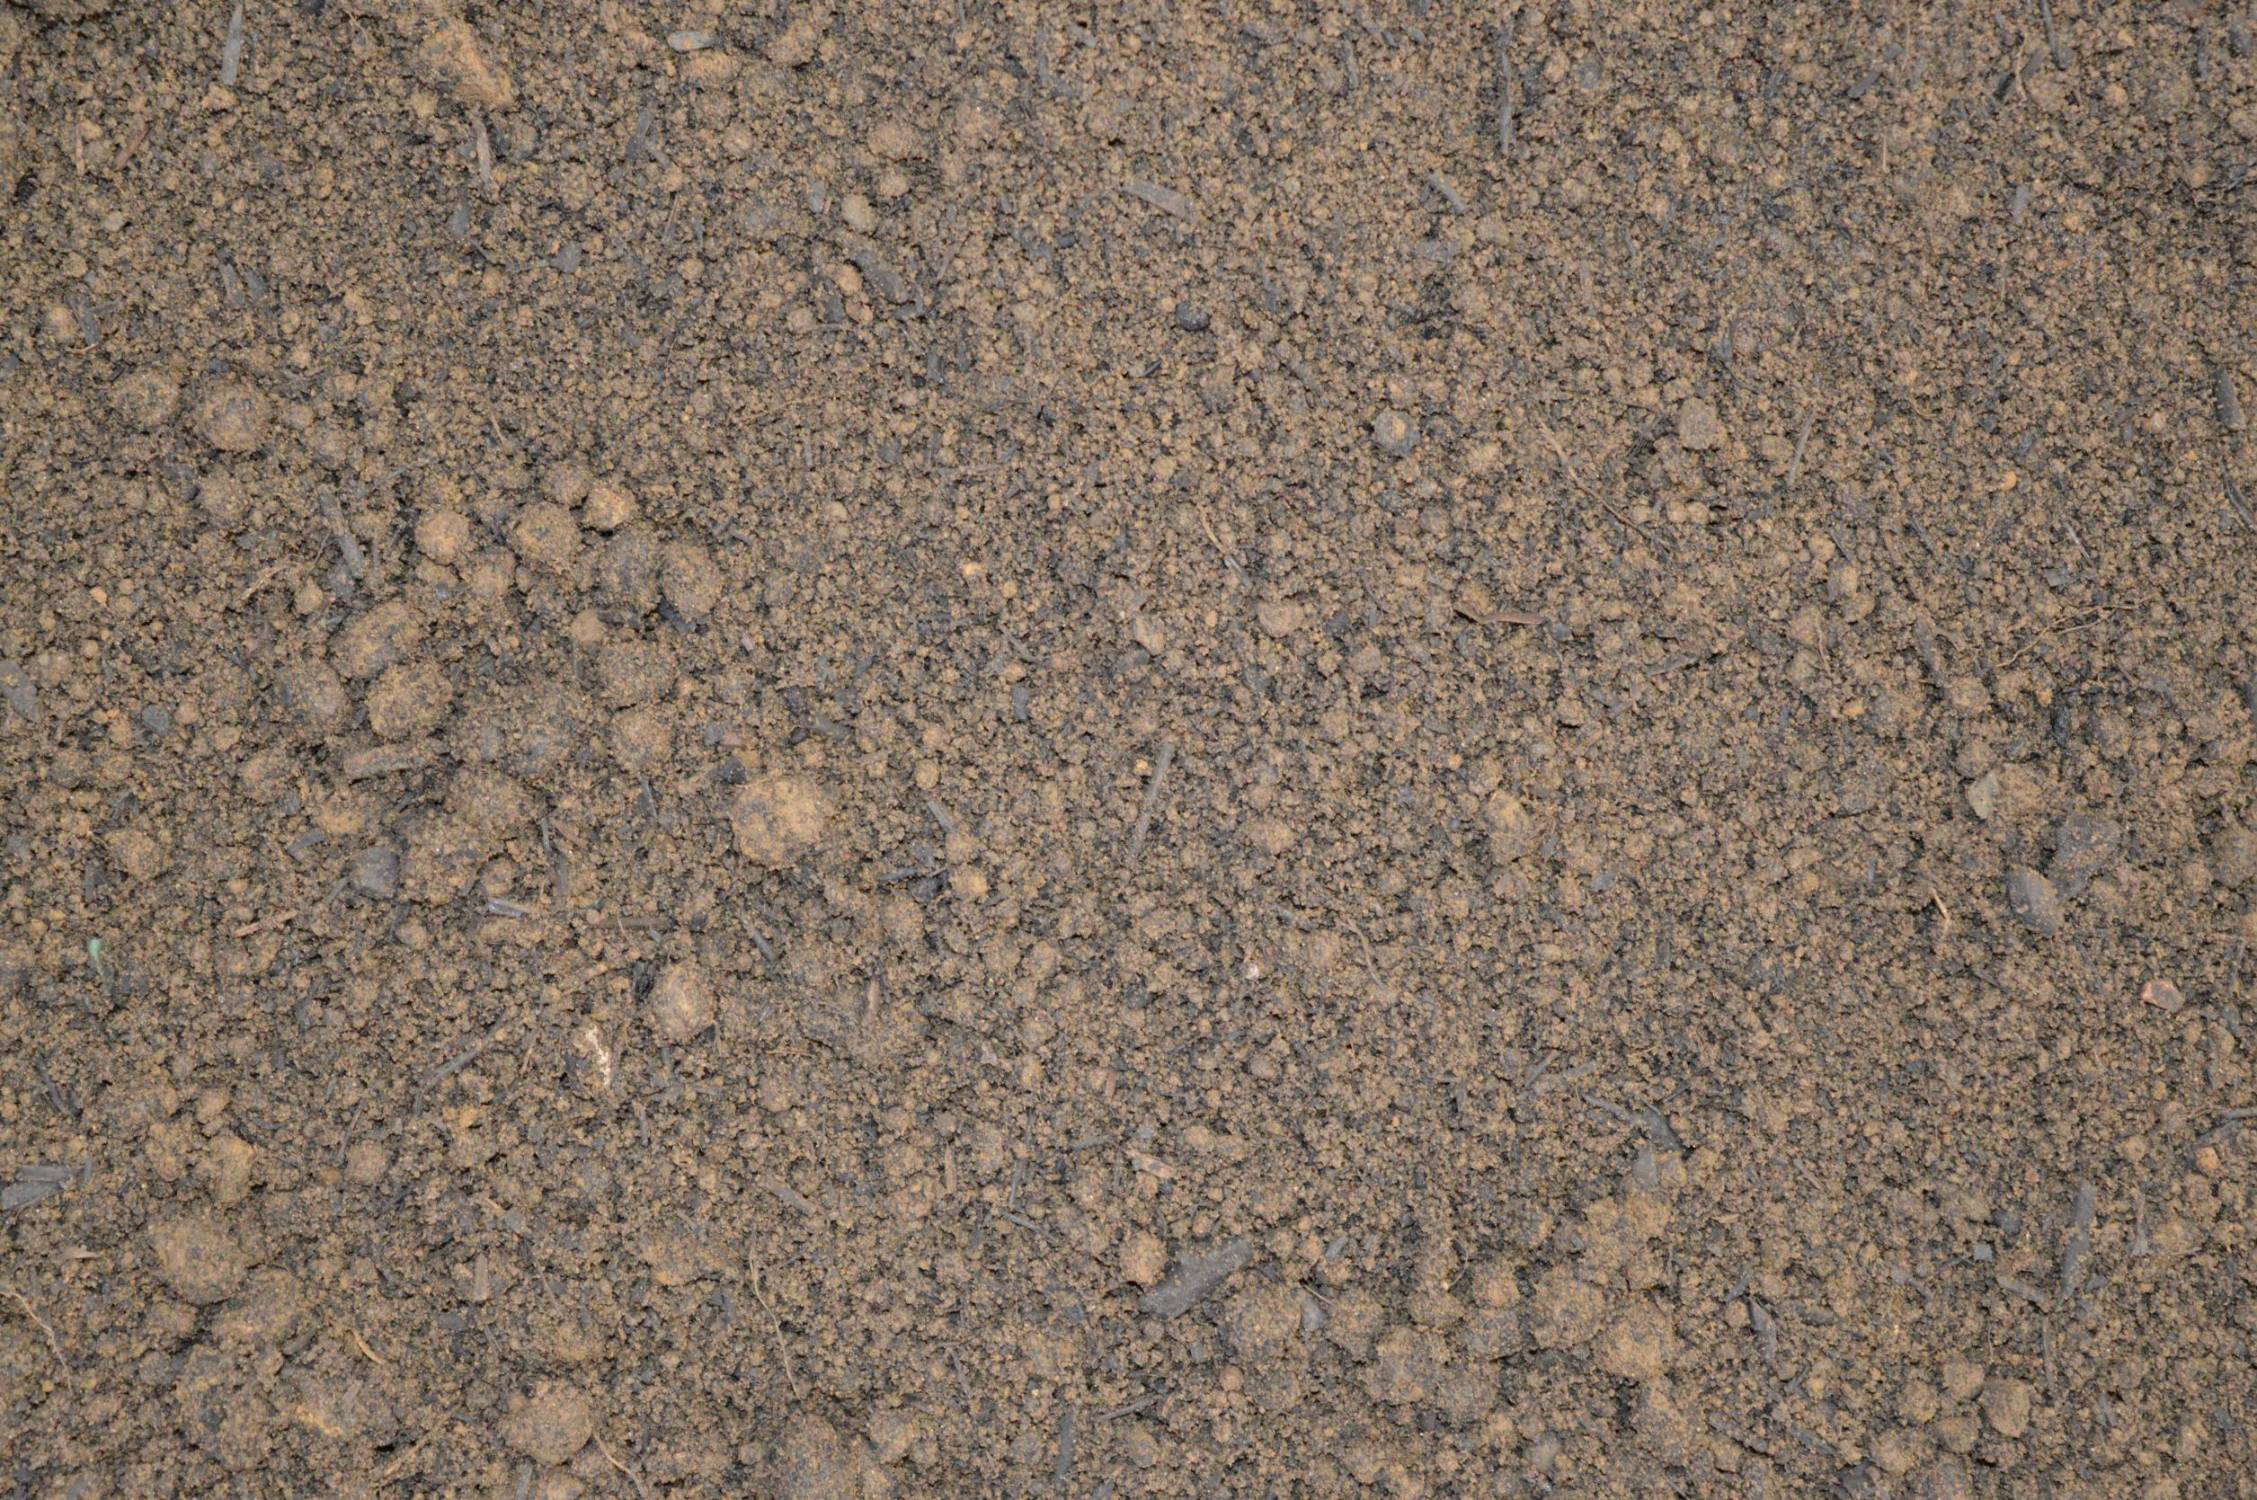  BLS 20 Boughton Screened - Natural Topsoil, Single Source